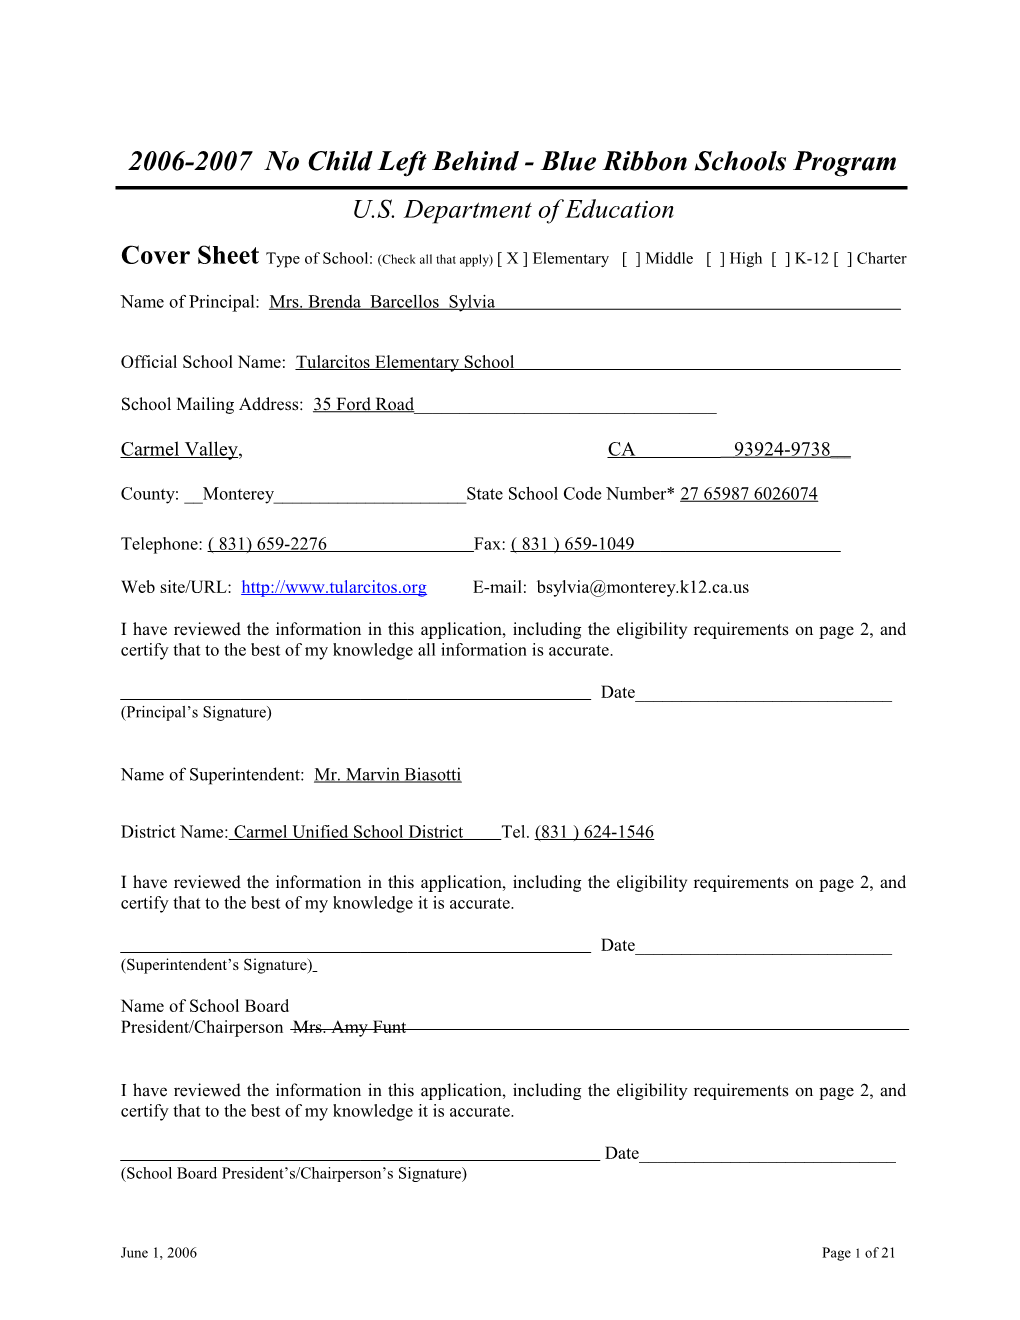 Application: 2006-2007, No Child Left Behind - Blue Ribbon Schools Program (MS Word) s14